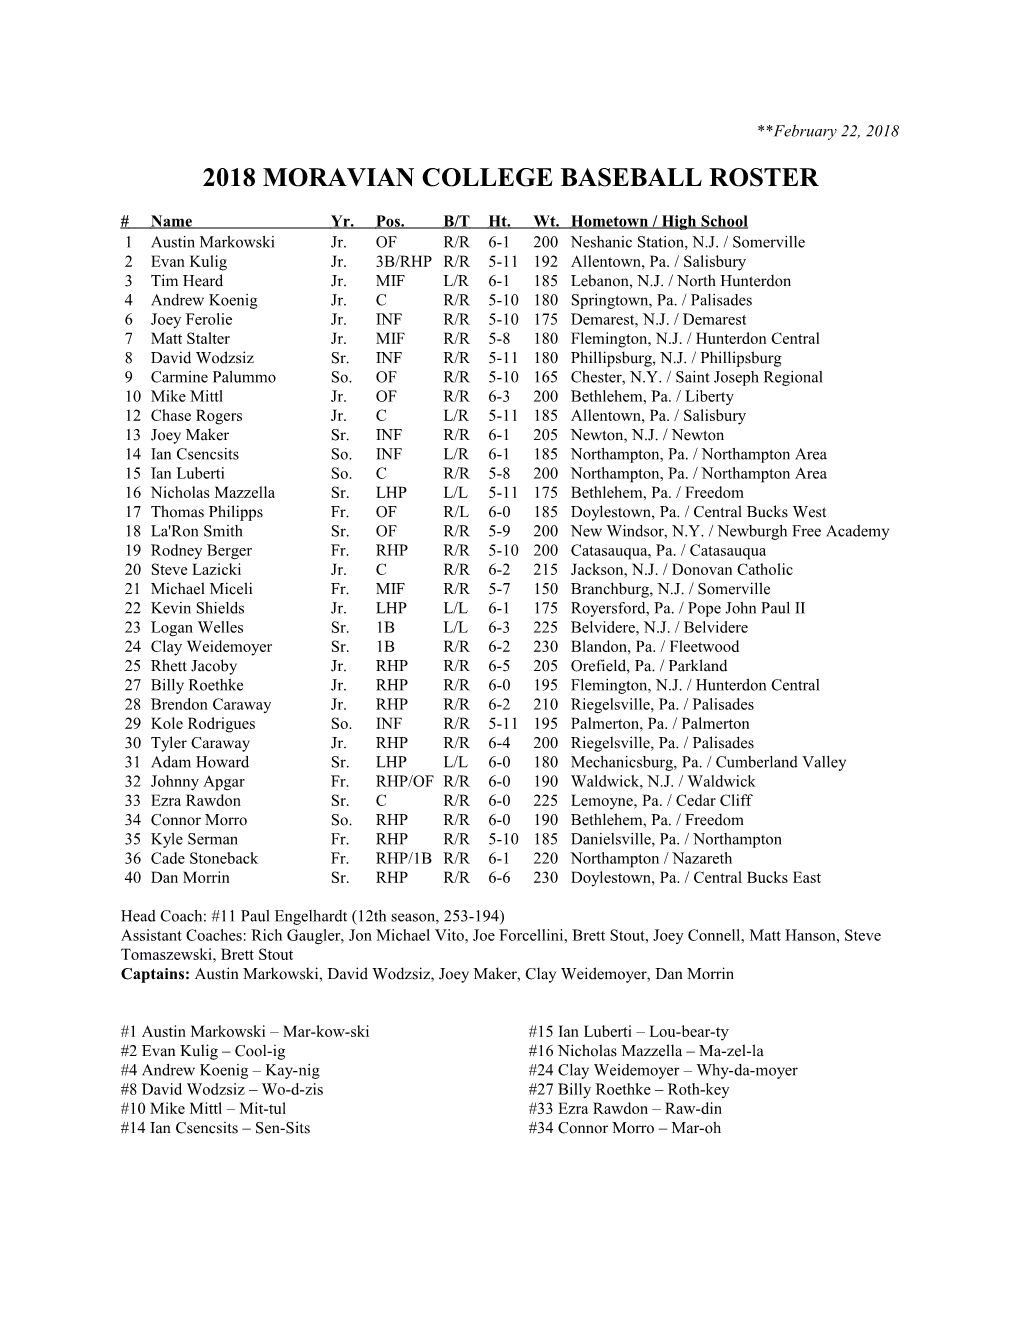 2018 Moravian College Baseball Roster